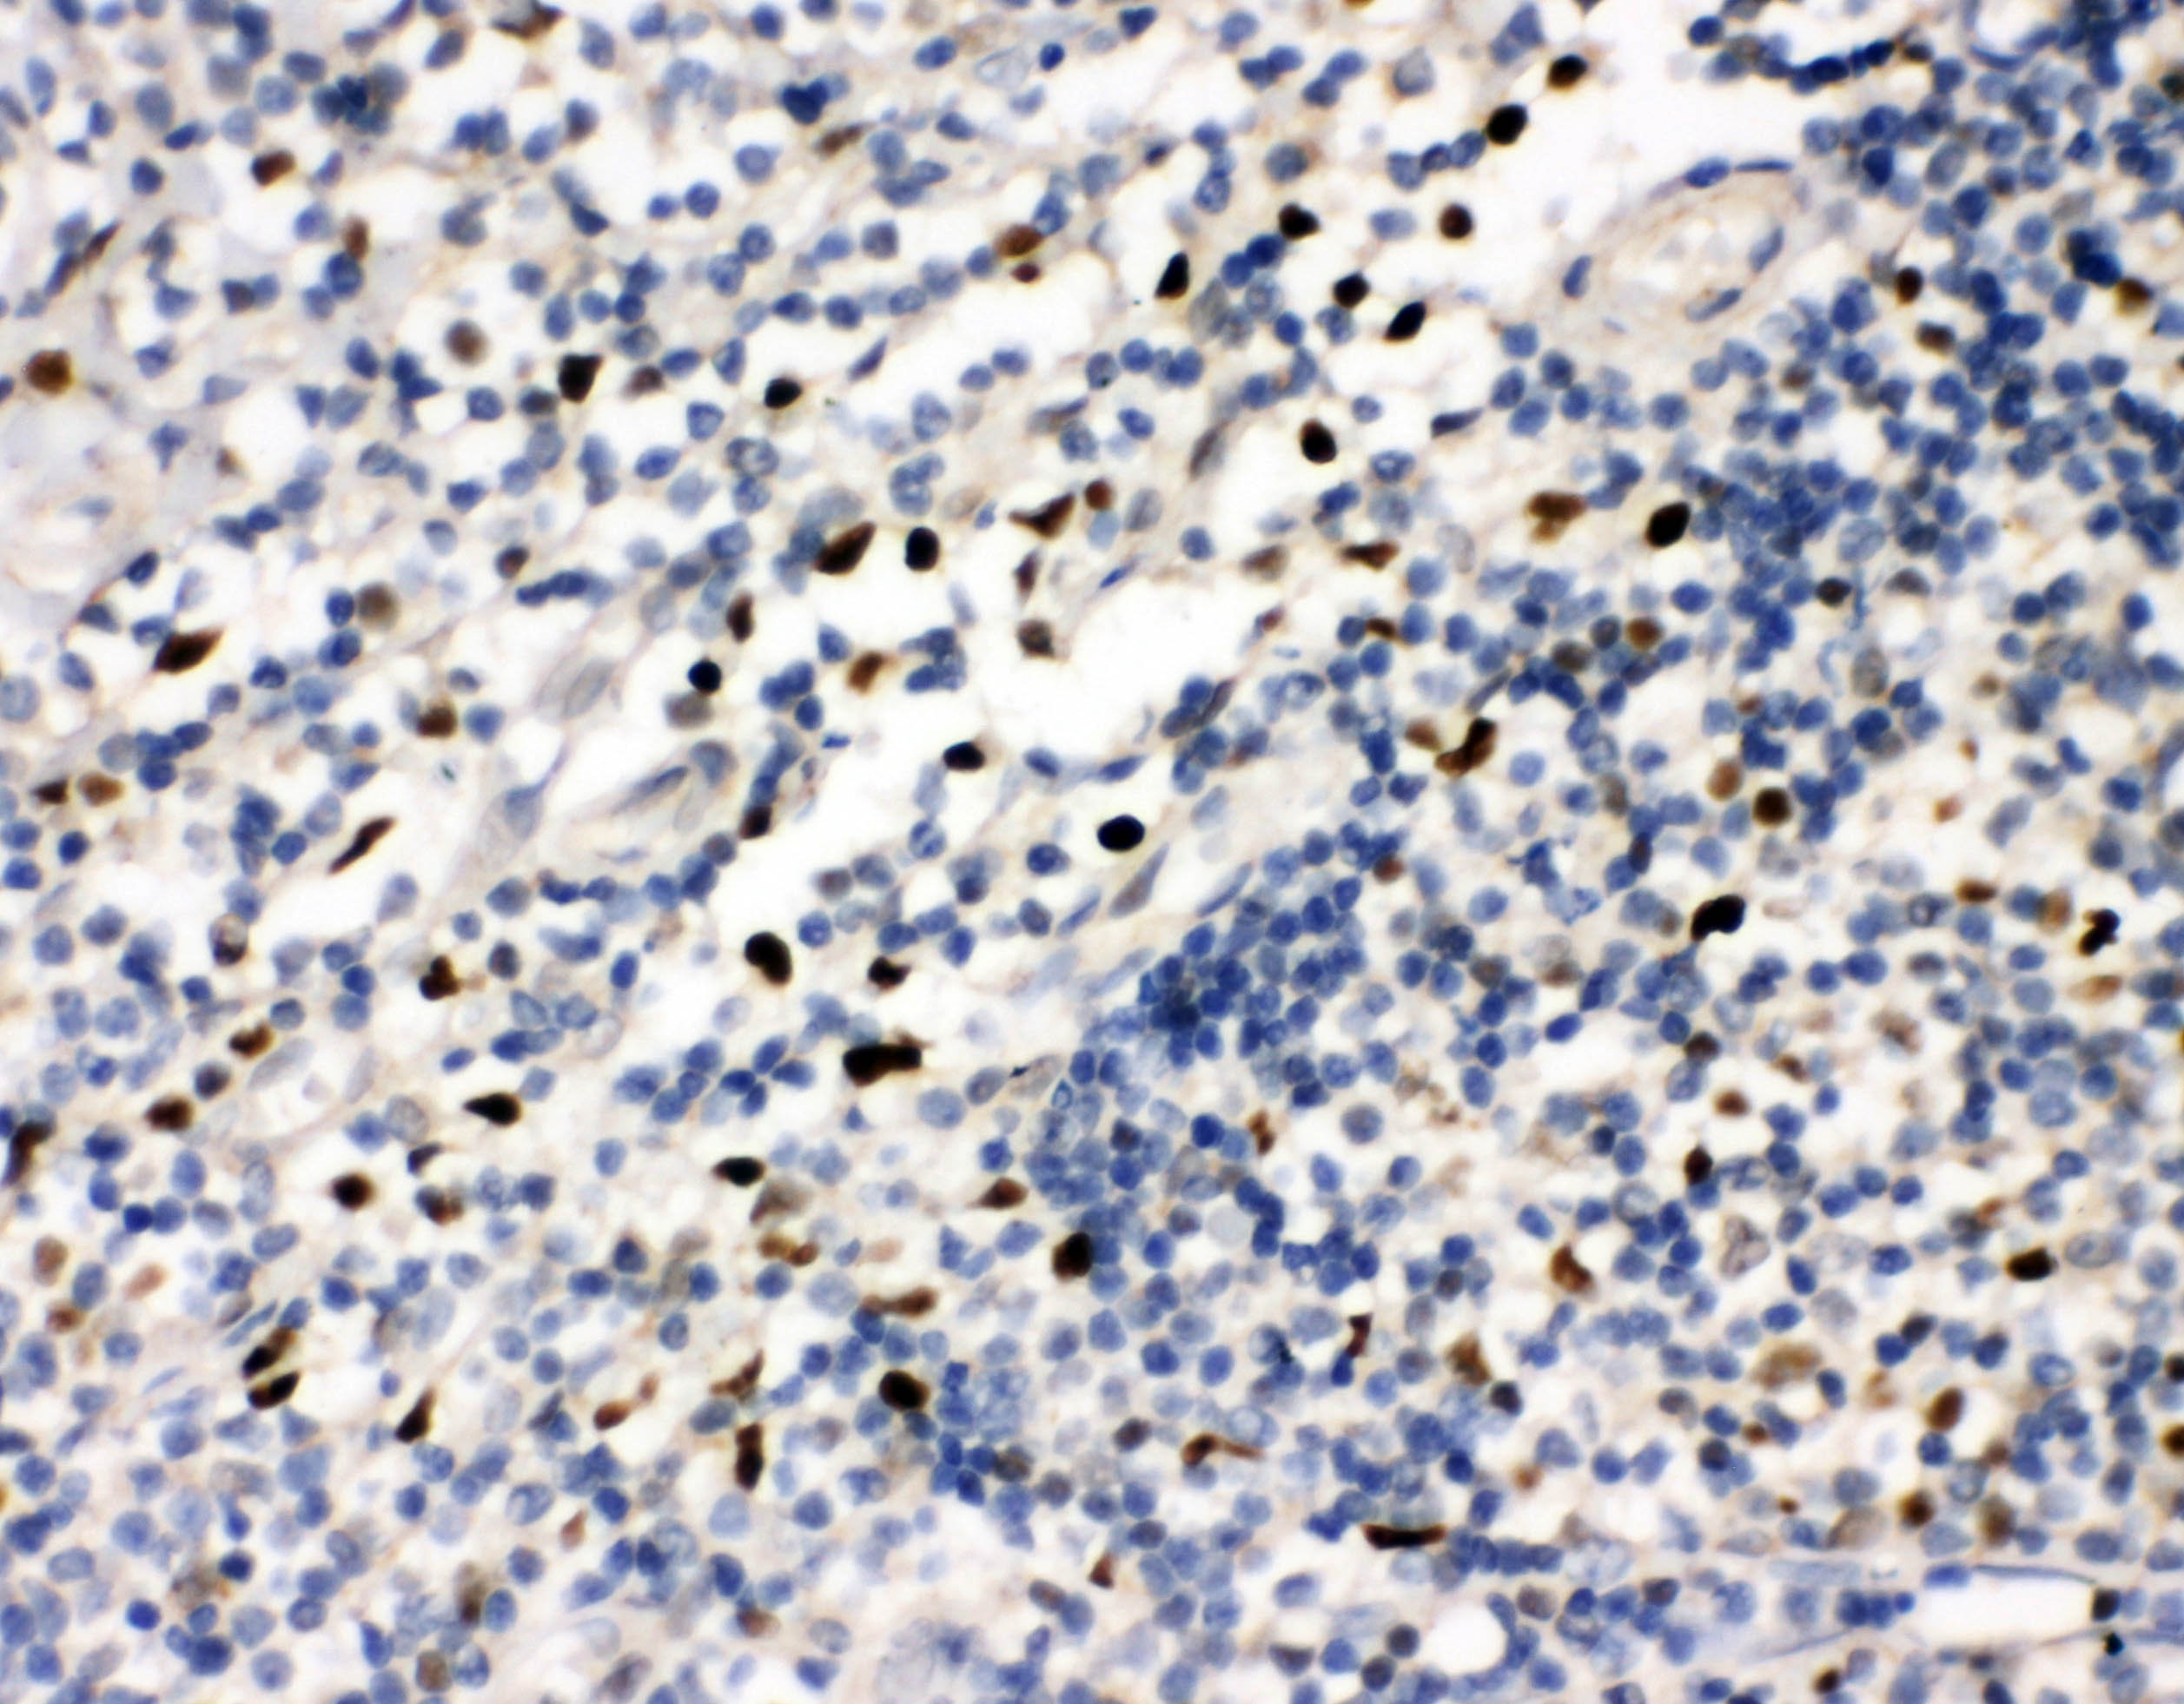 FLI1 Antibody - N-terminal region (OABB01342) in Human Tonsil Tissue using Immunohistochemistry